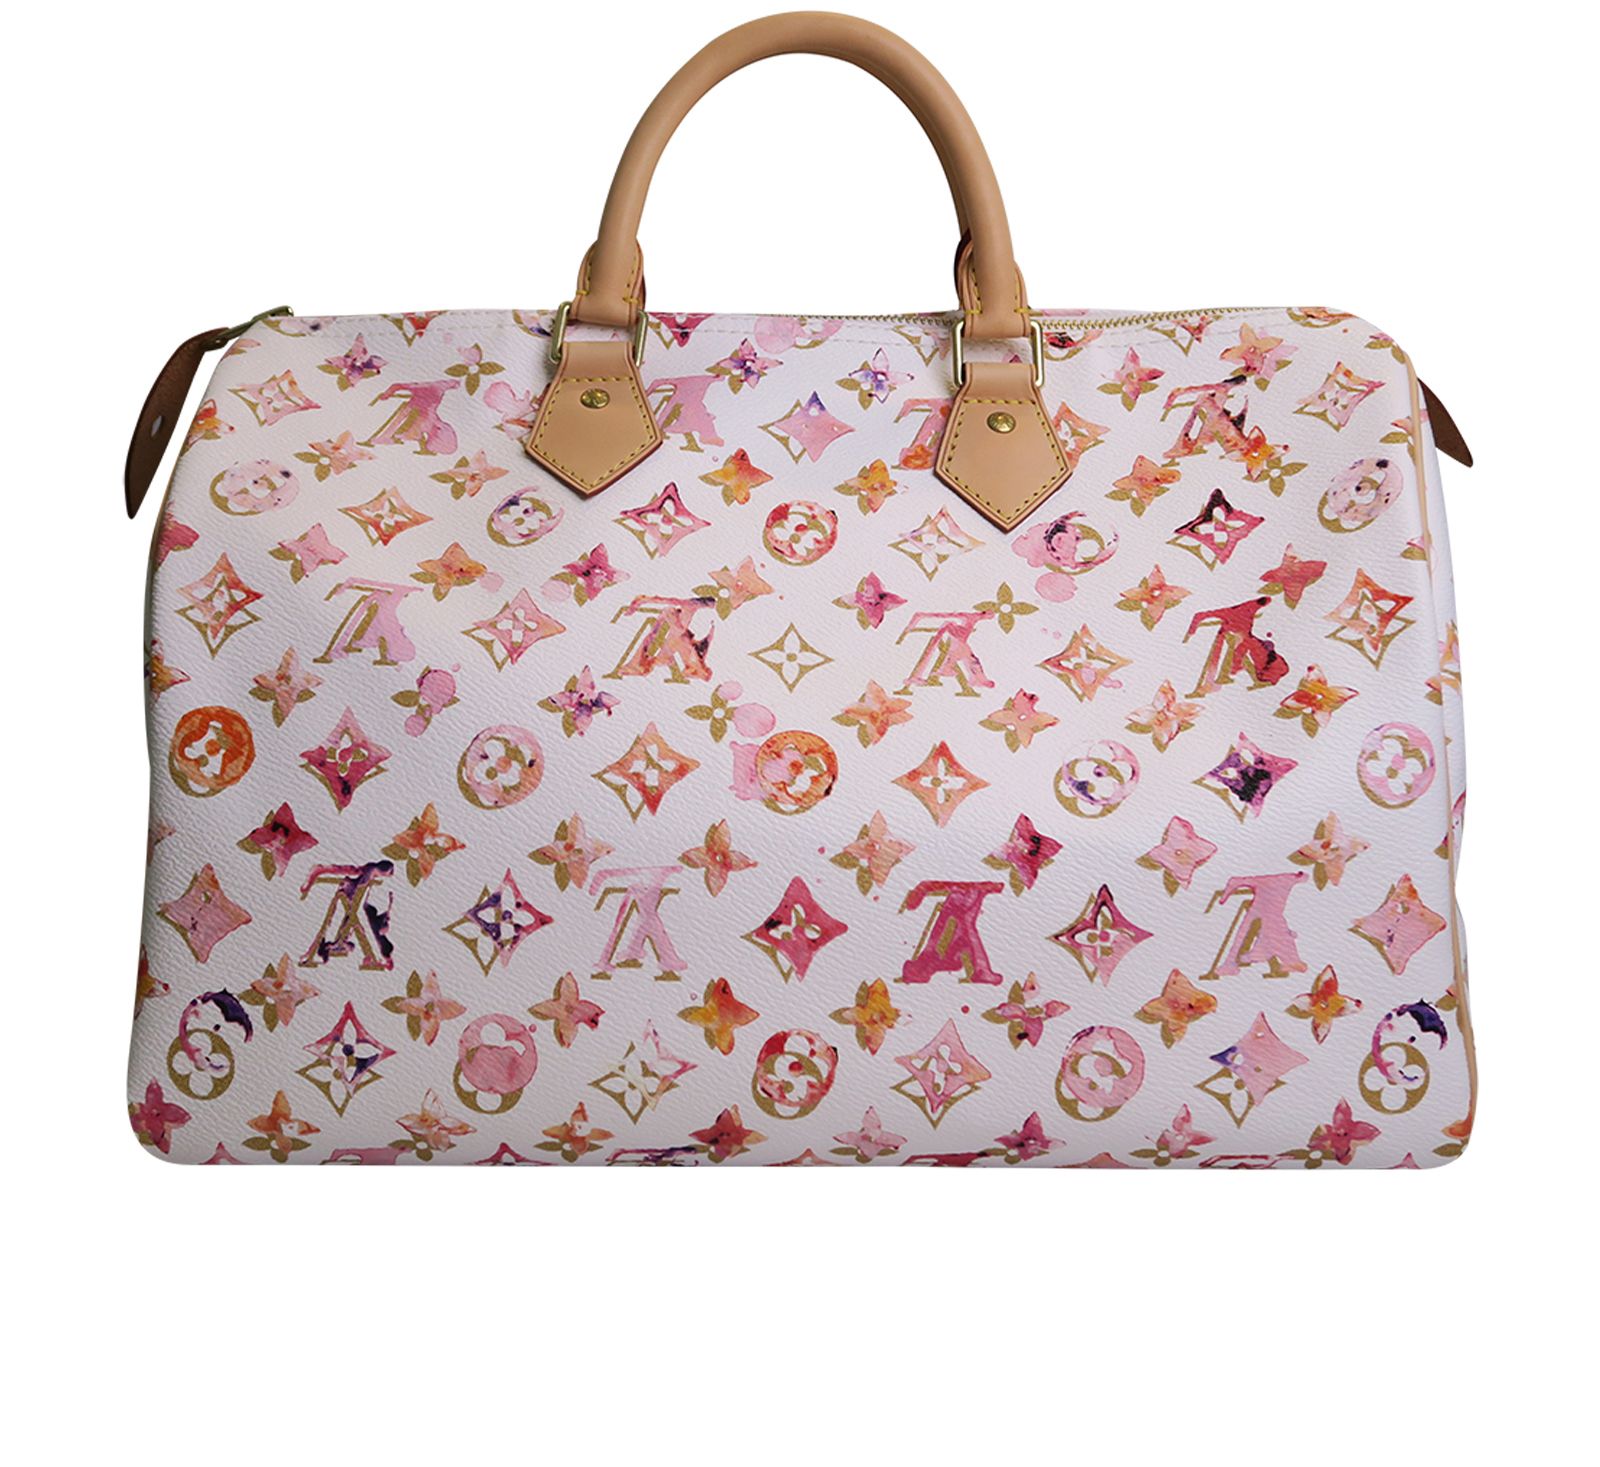 Louis Vuitton Monogram Aquarelle Speedy 30 - Brown Handle Bags